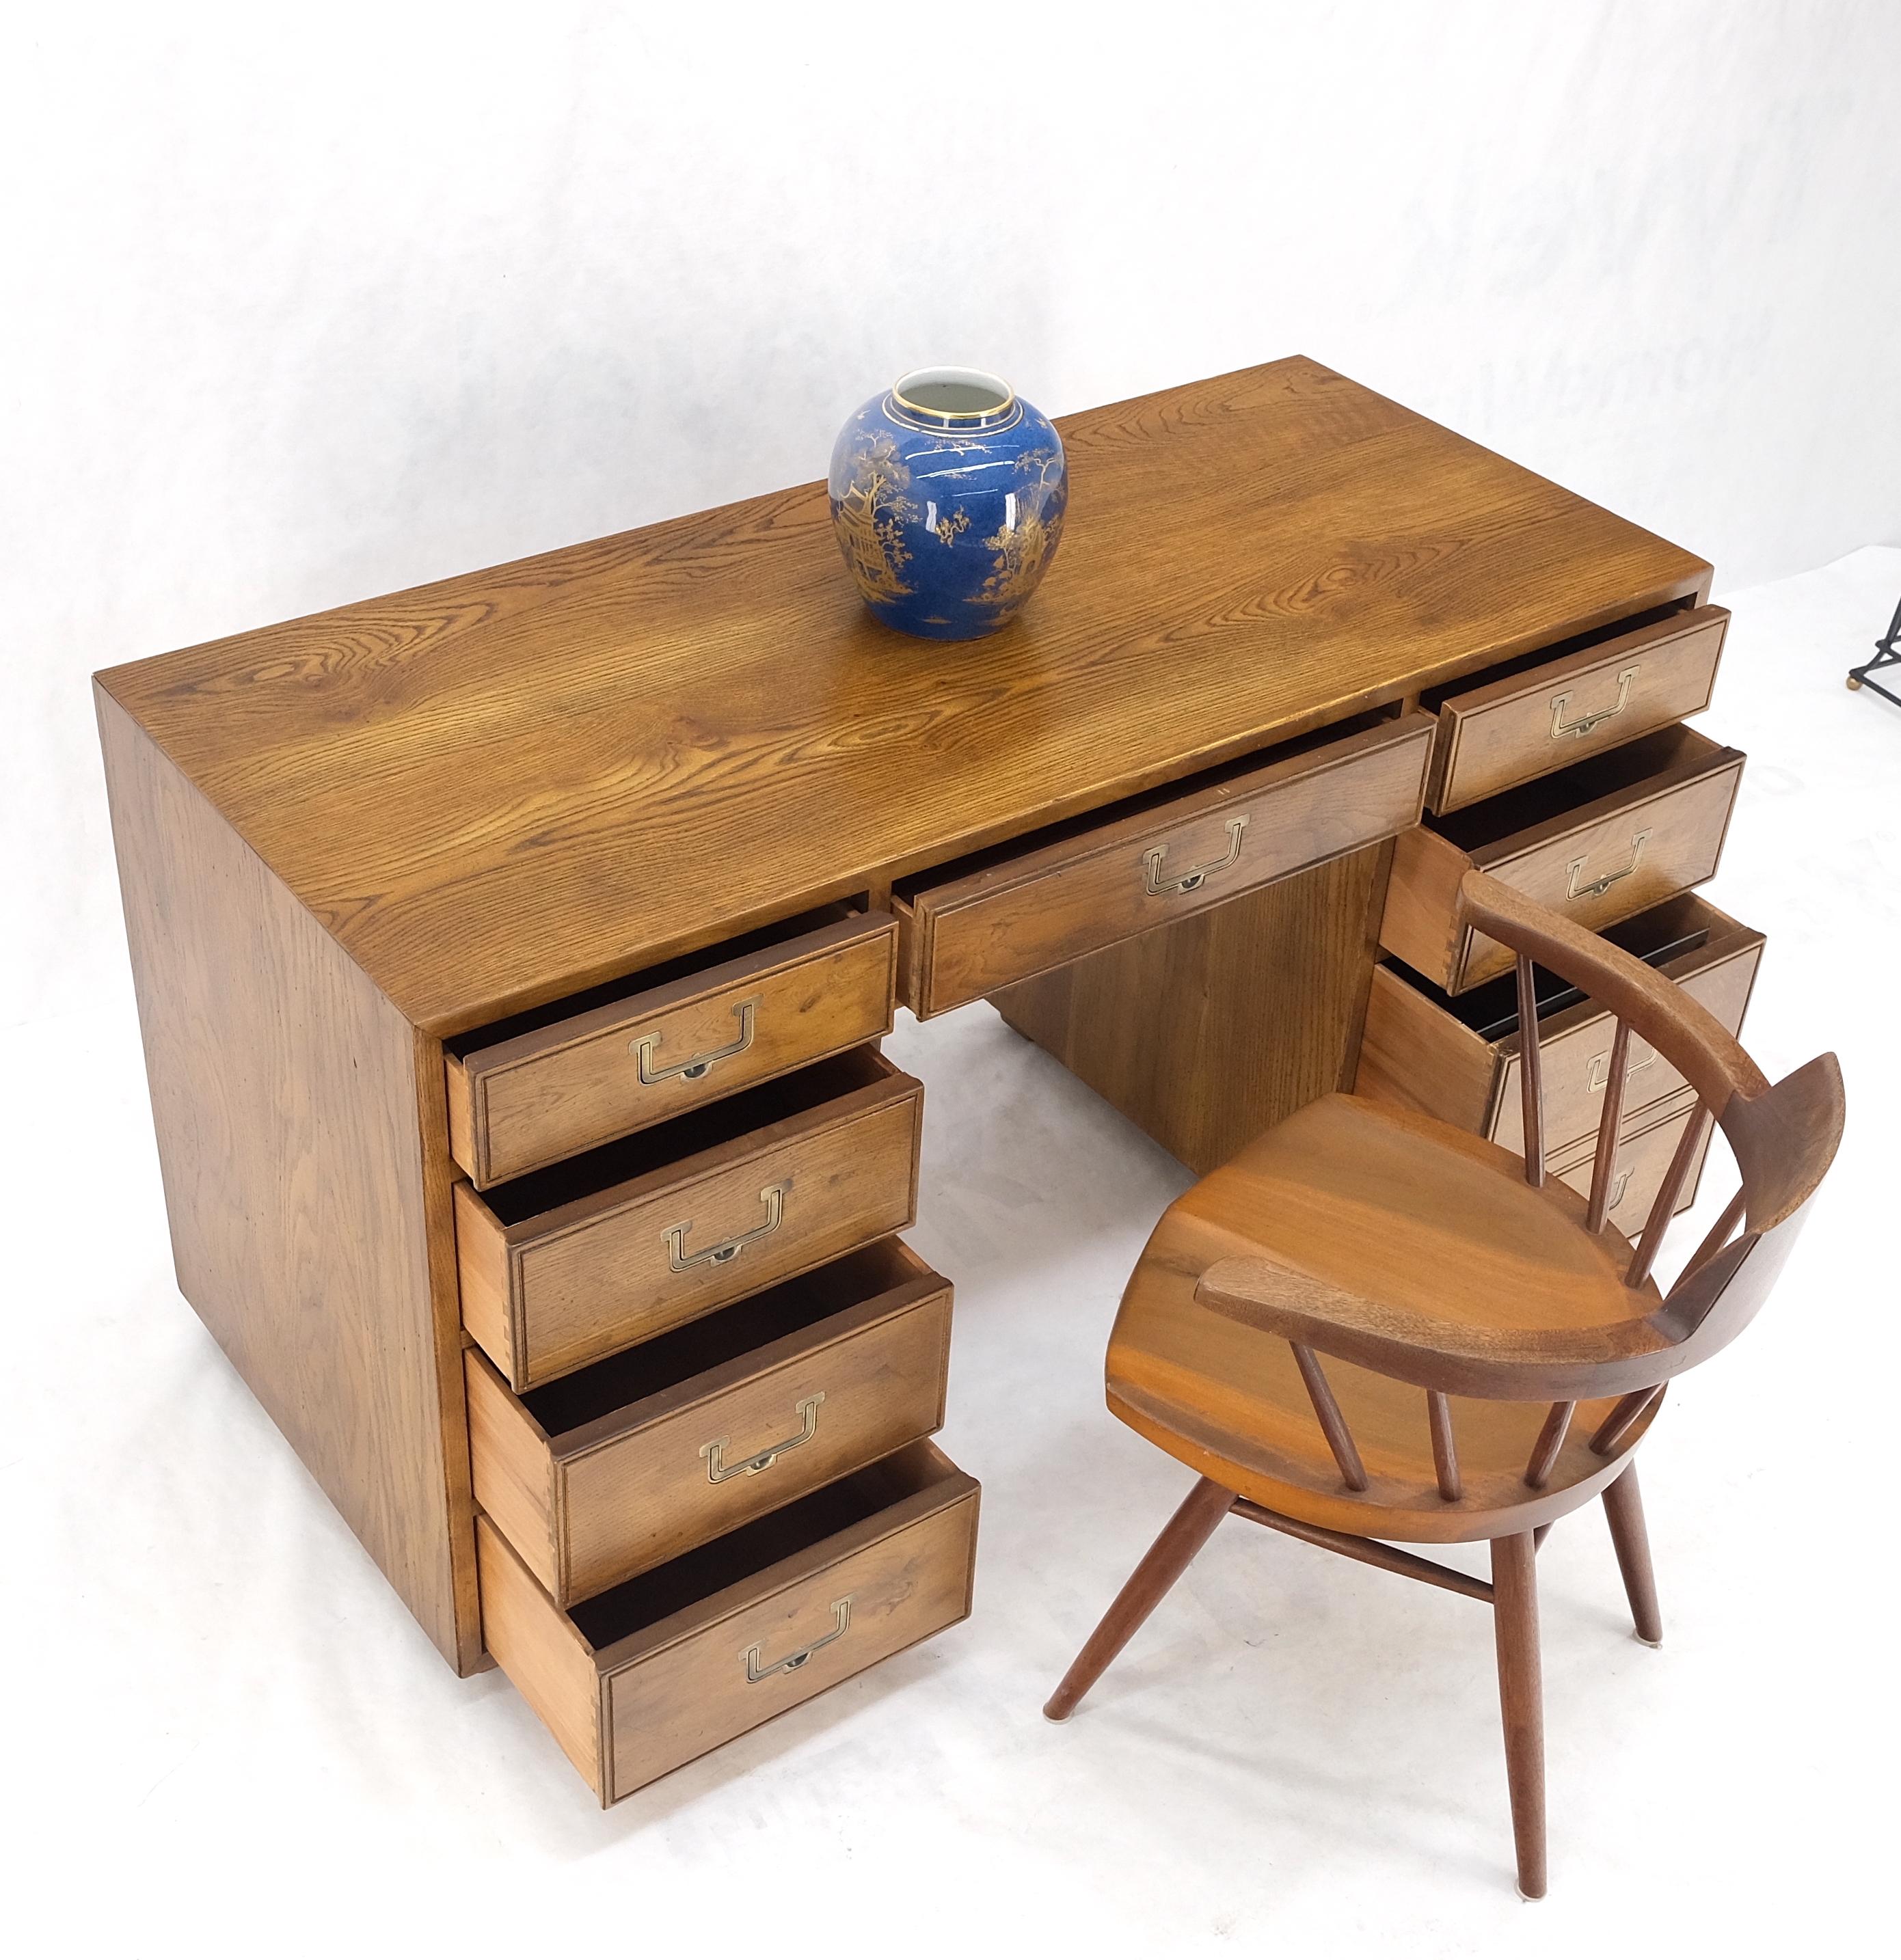 Henredon double pedestal campaign style Mid-Century Modern desk w/ brass drop pulls mint!